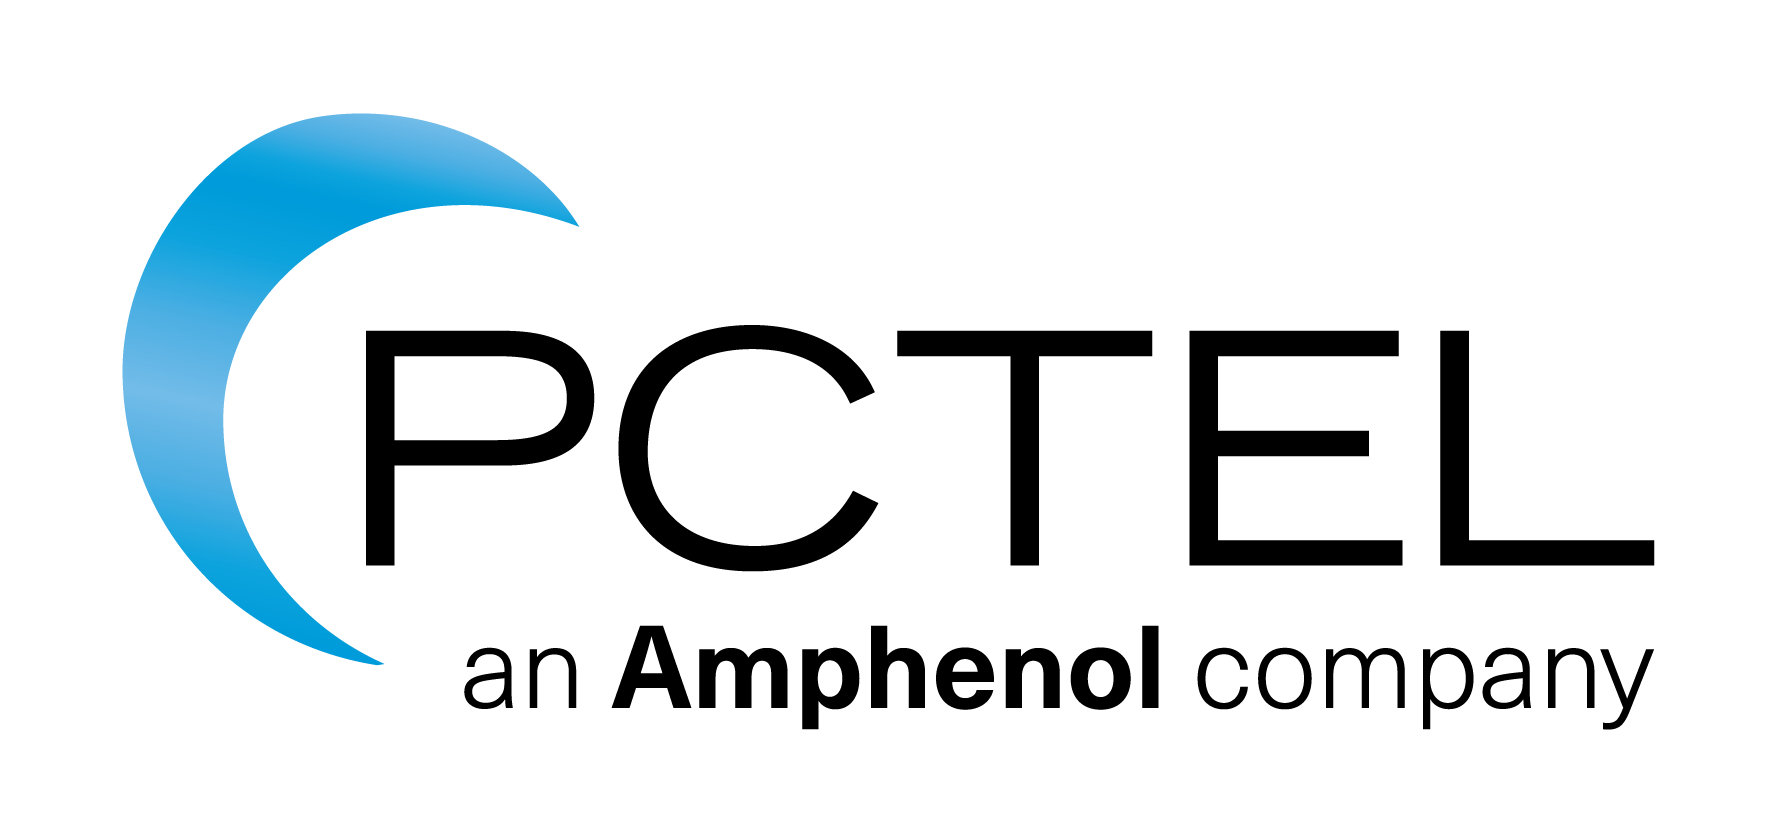 PCTEL Logo neu